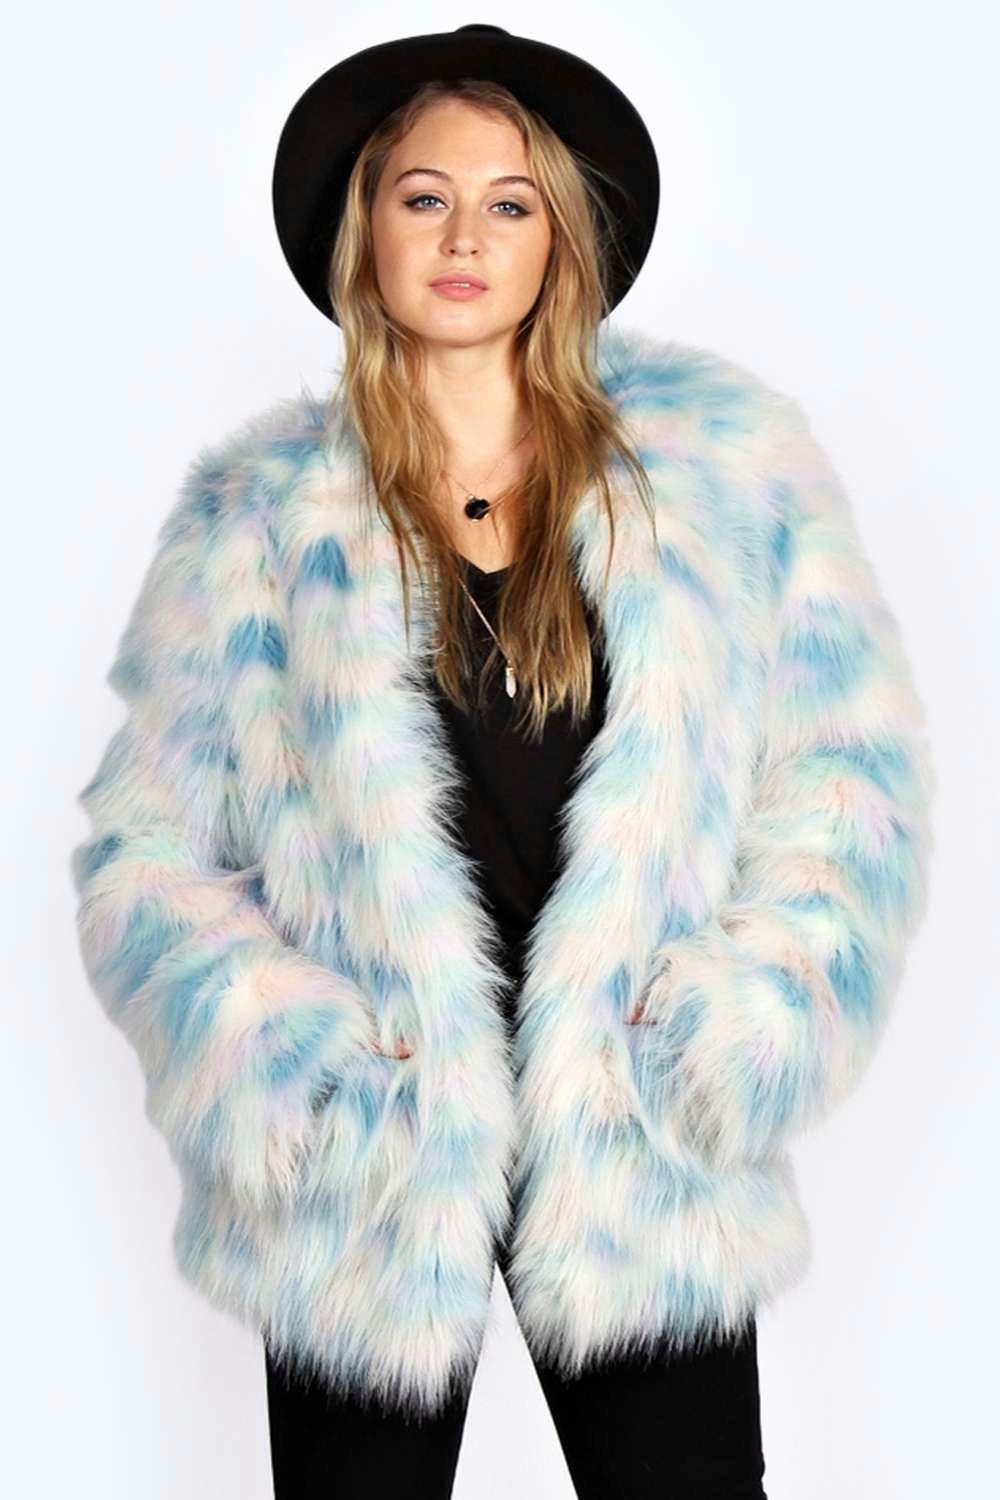 Katja Rainbow Pastel Faux Fur Coat at boohoo.com